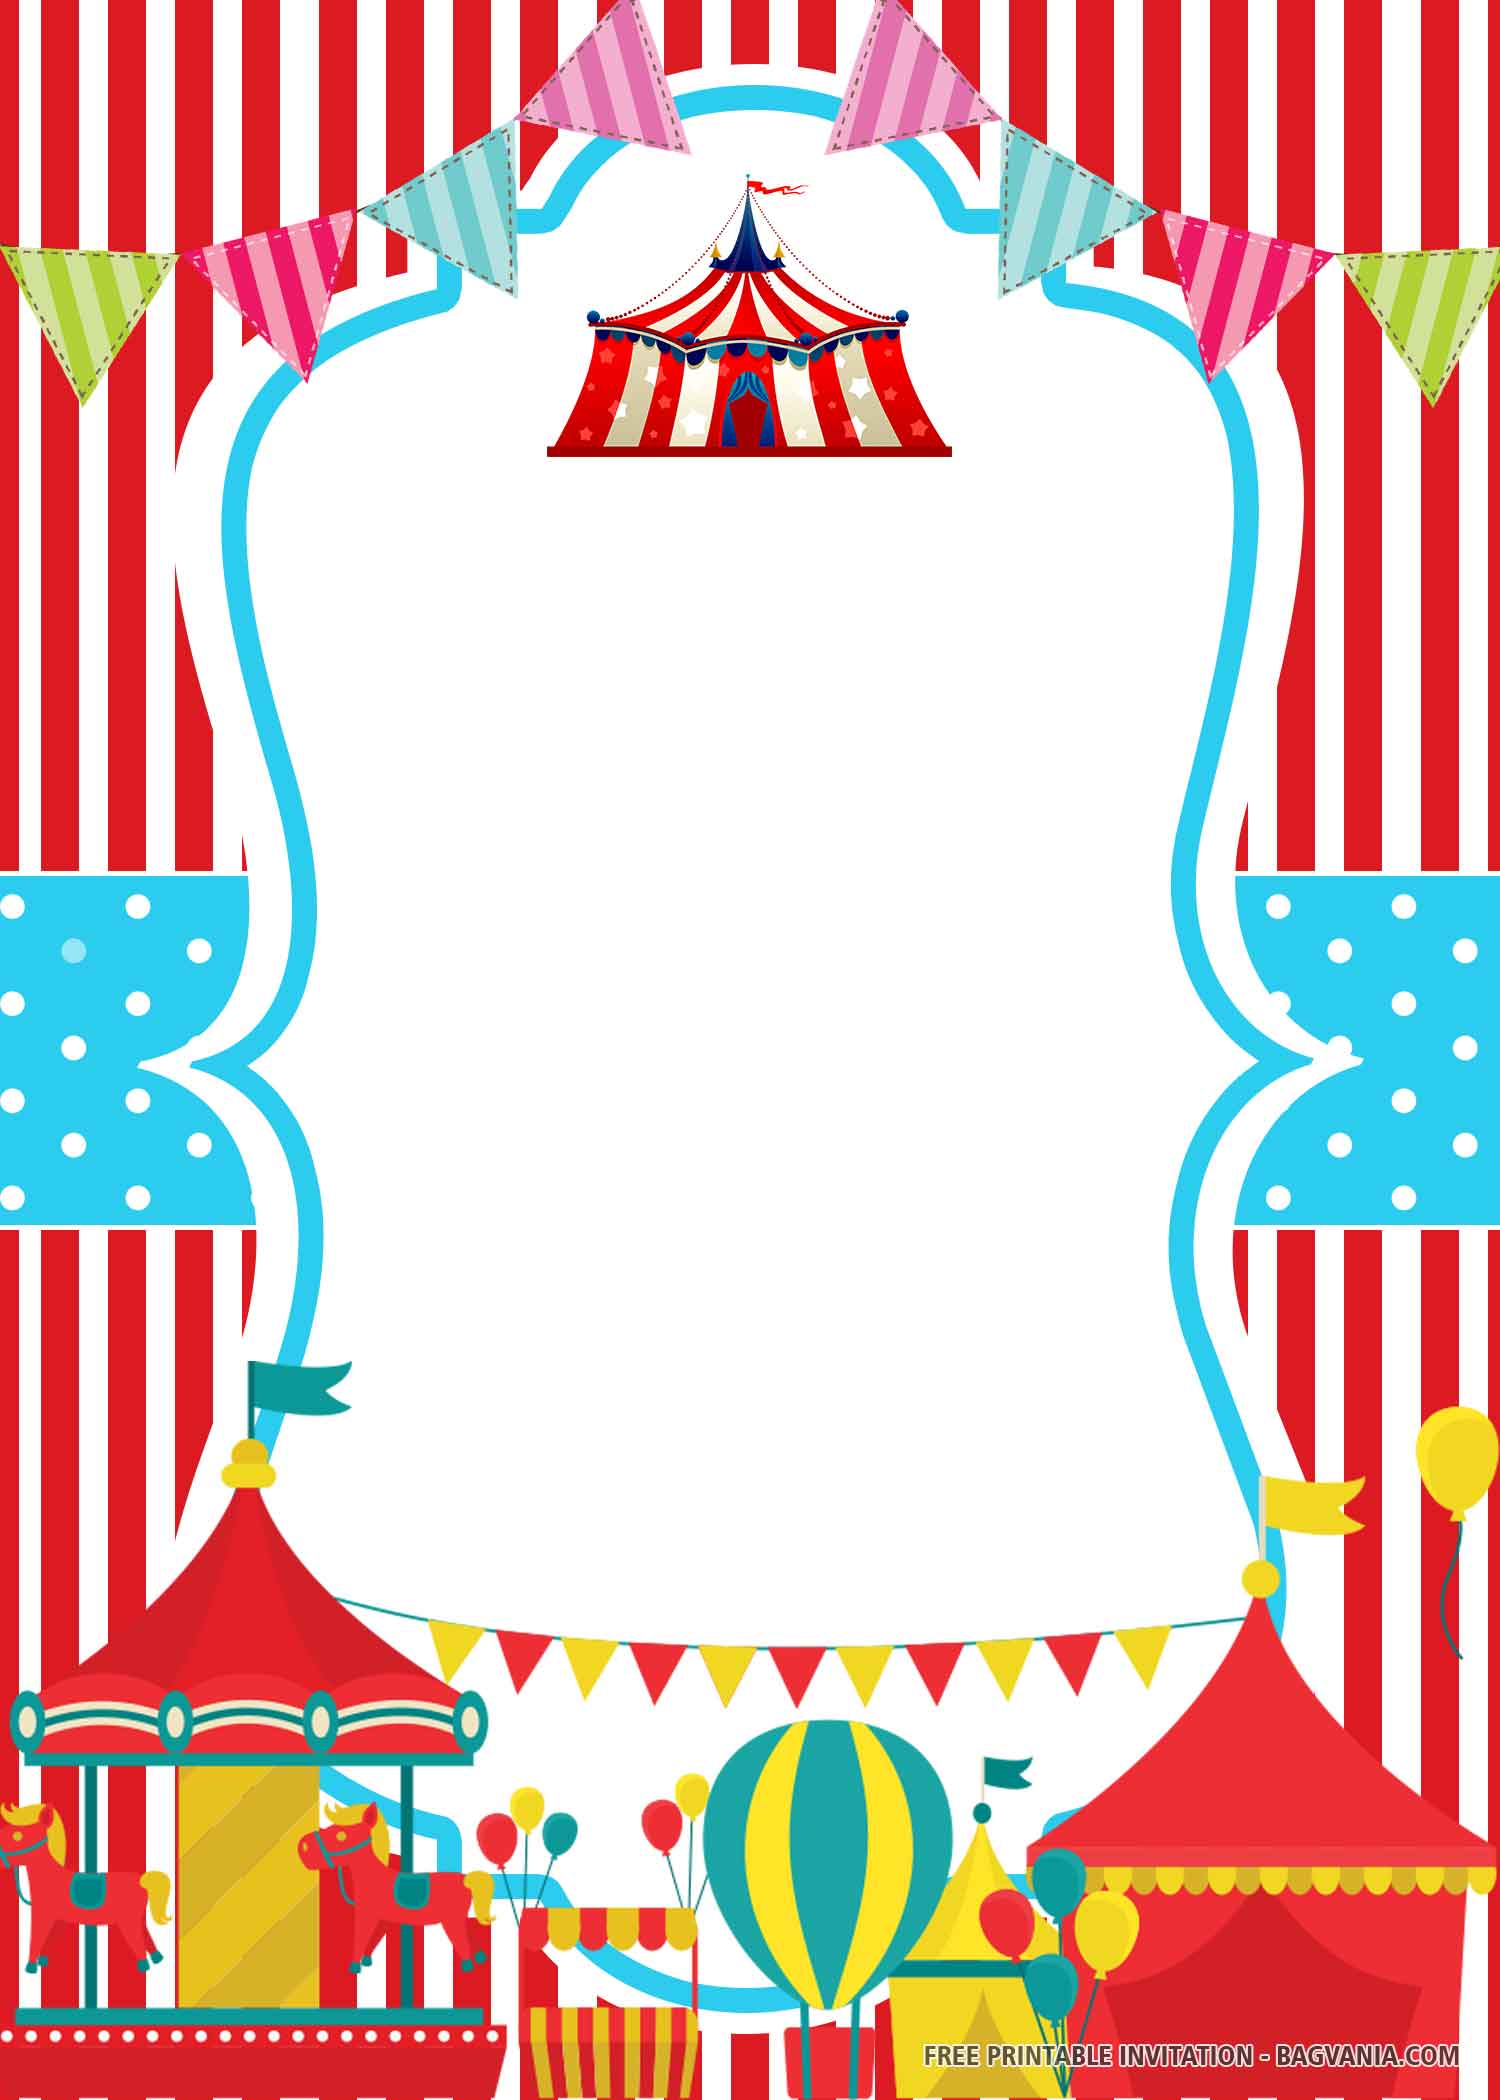  FREE PRINTABLE Stripes Circus Birthday Invitation Templates FREE 